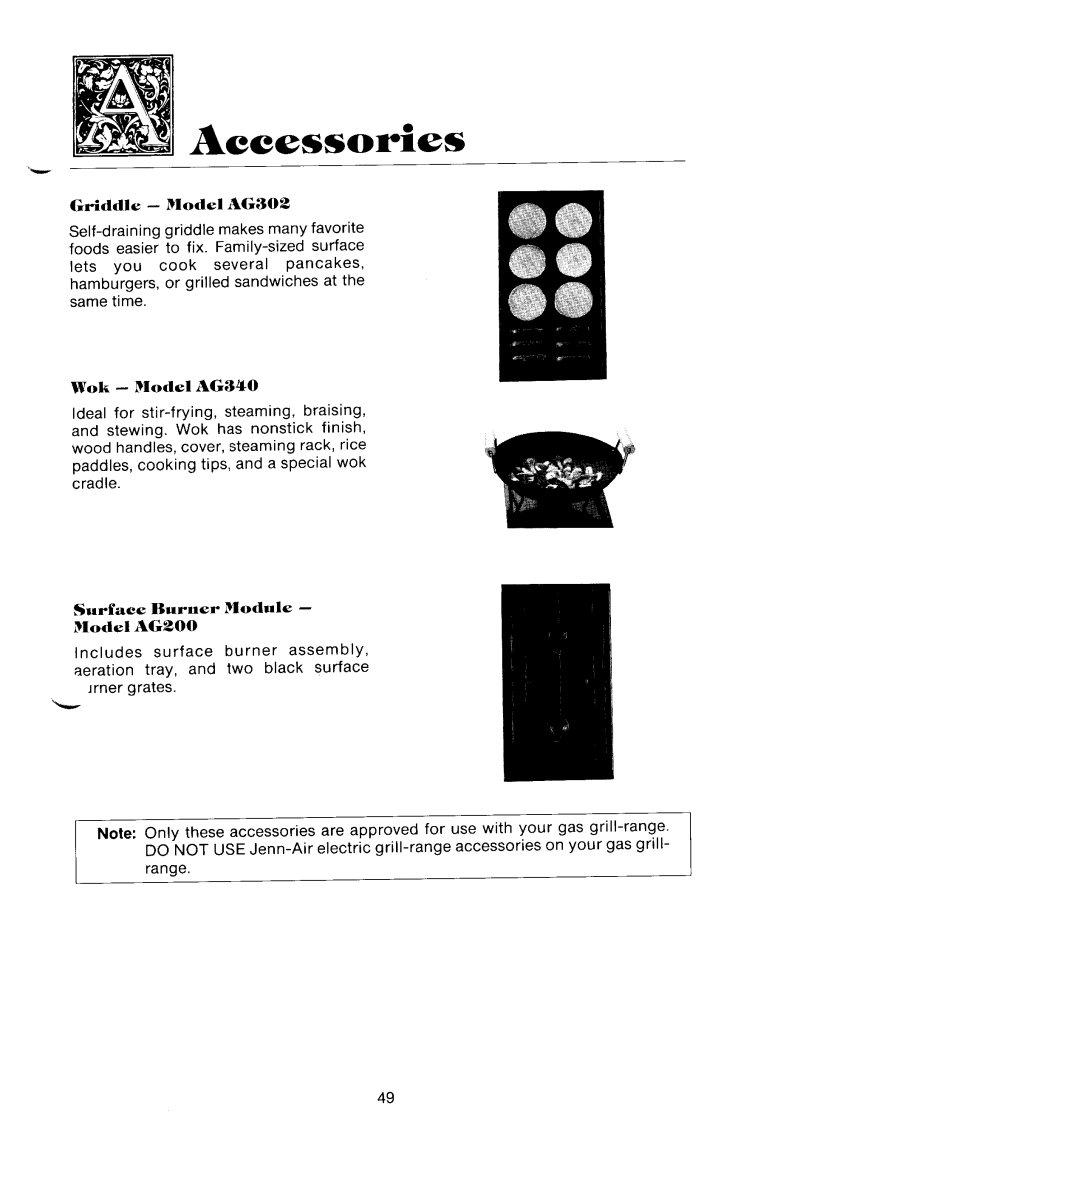 Jenn-Air SEG196 manual Accessories, Wok -- Model AG340, Surface Burner Module Model AG200 